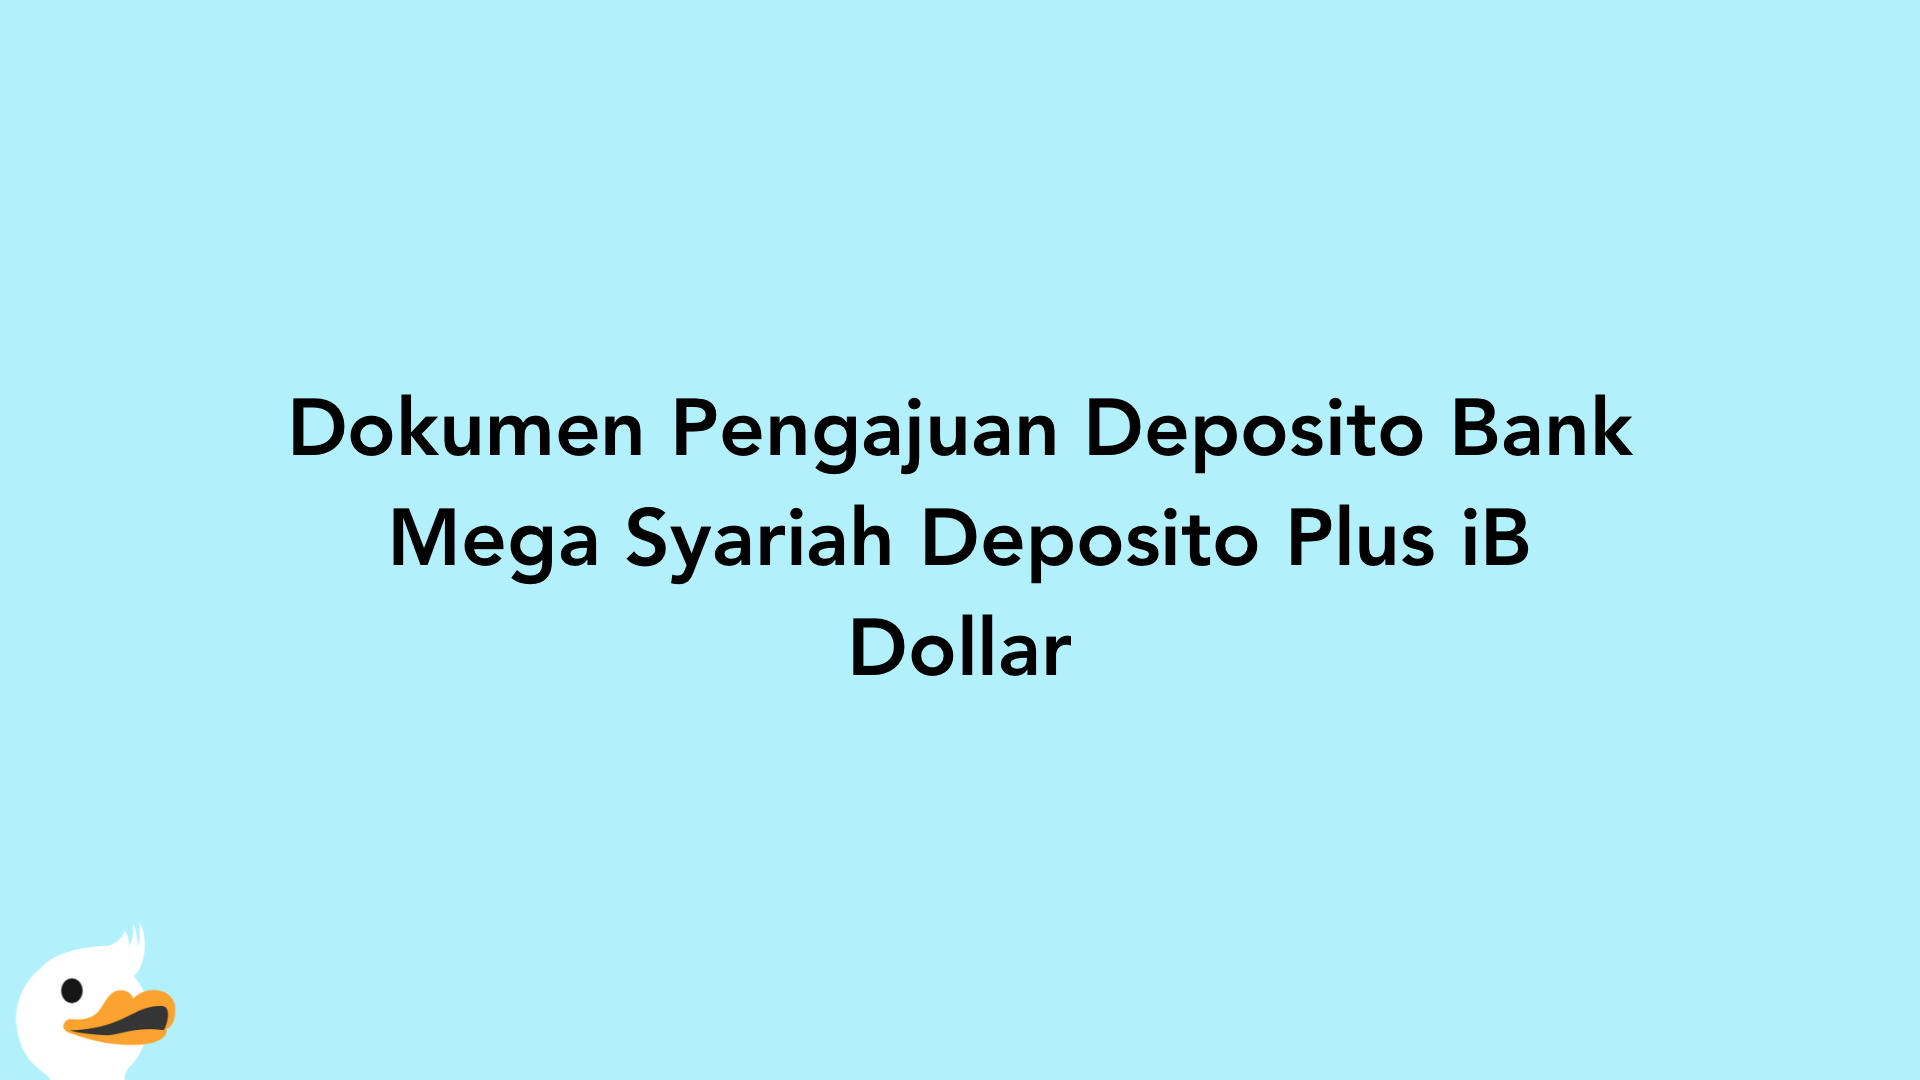 Dokumen Pengajuan Deposito Bank Mega Syariah Deposito Plus iB Dollar